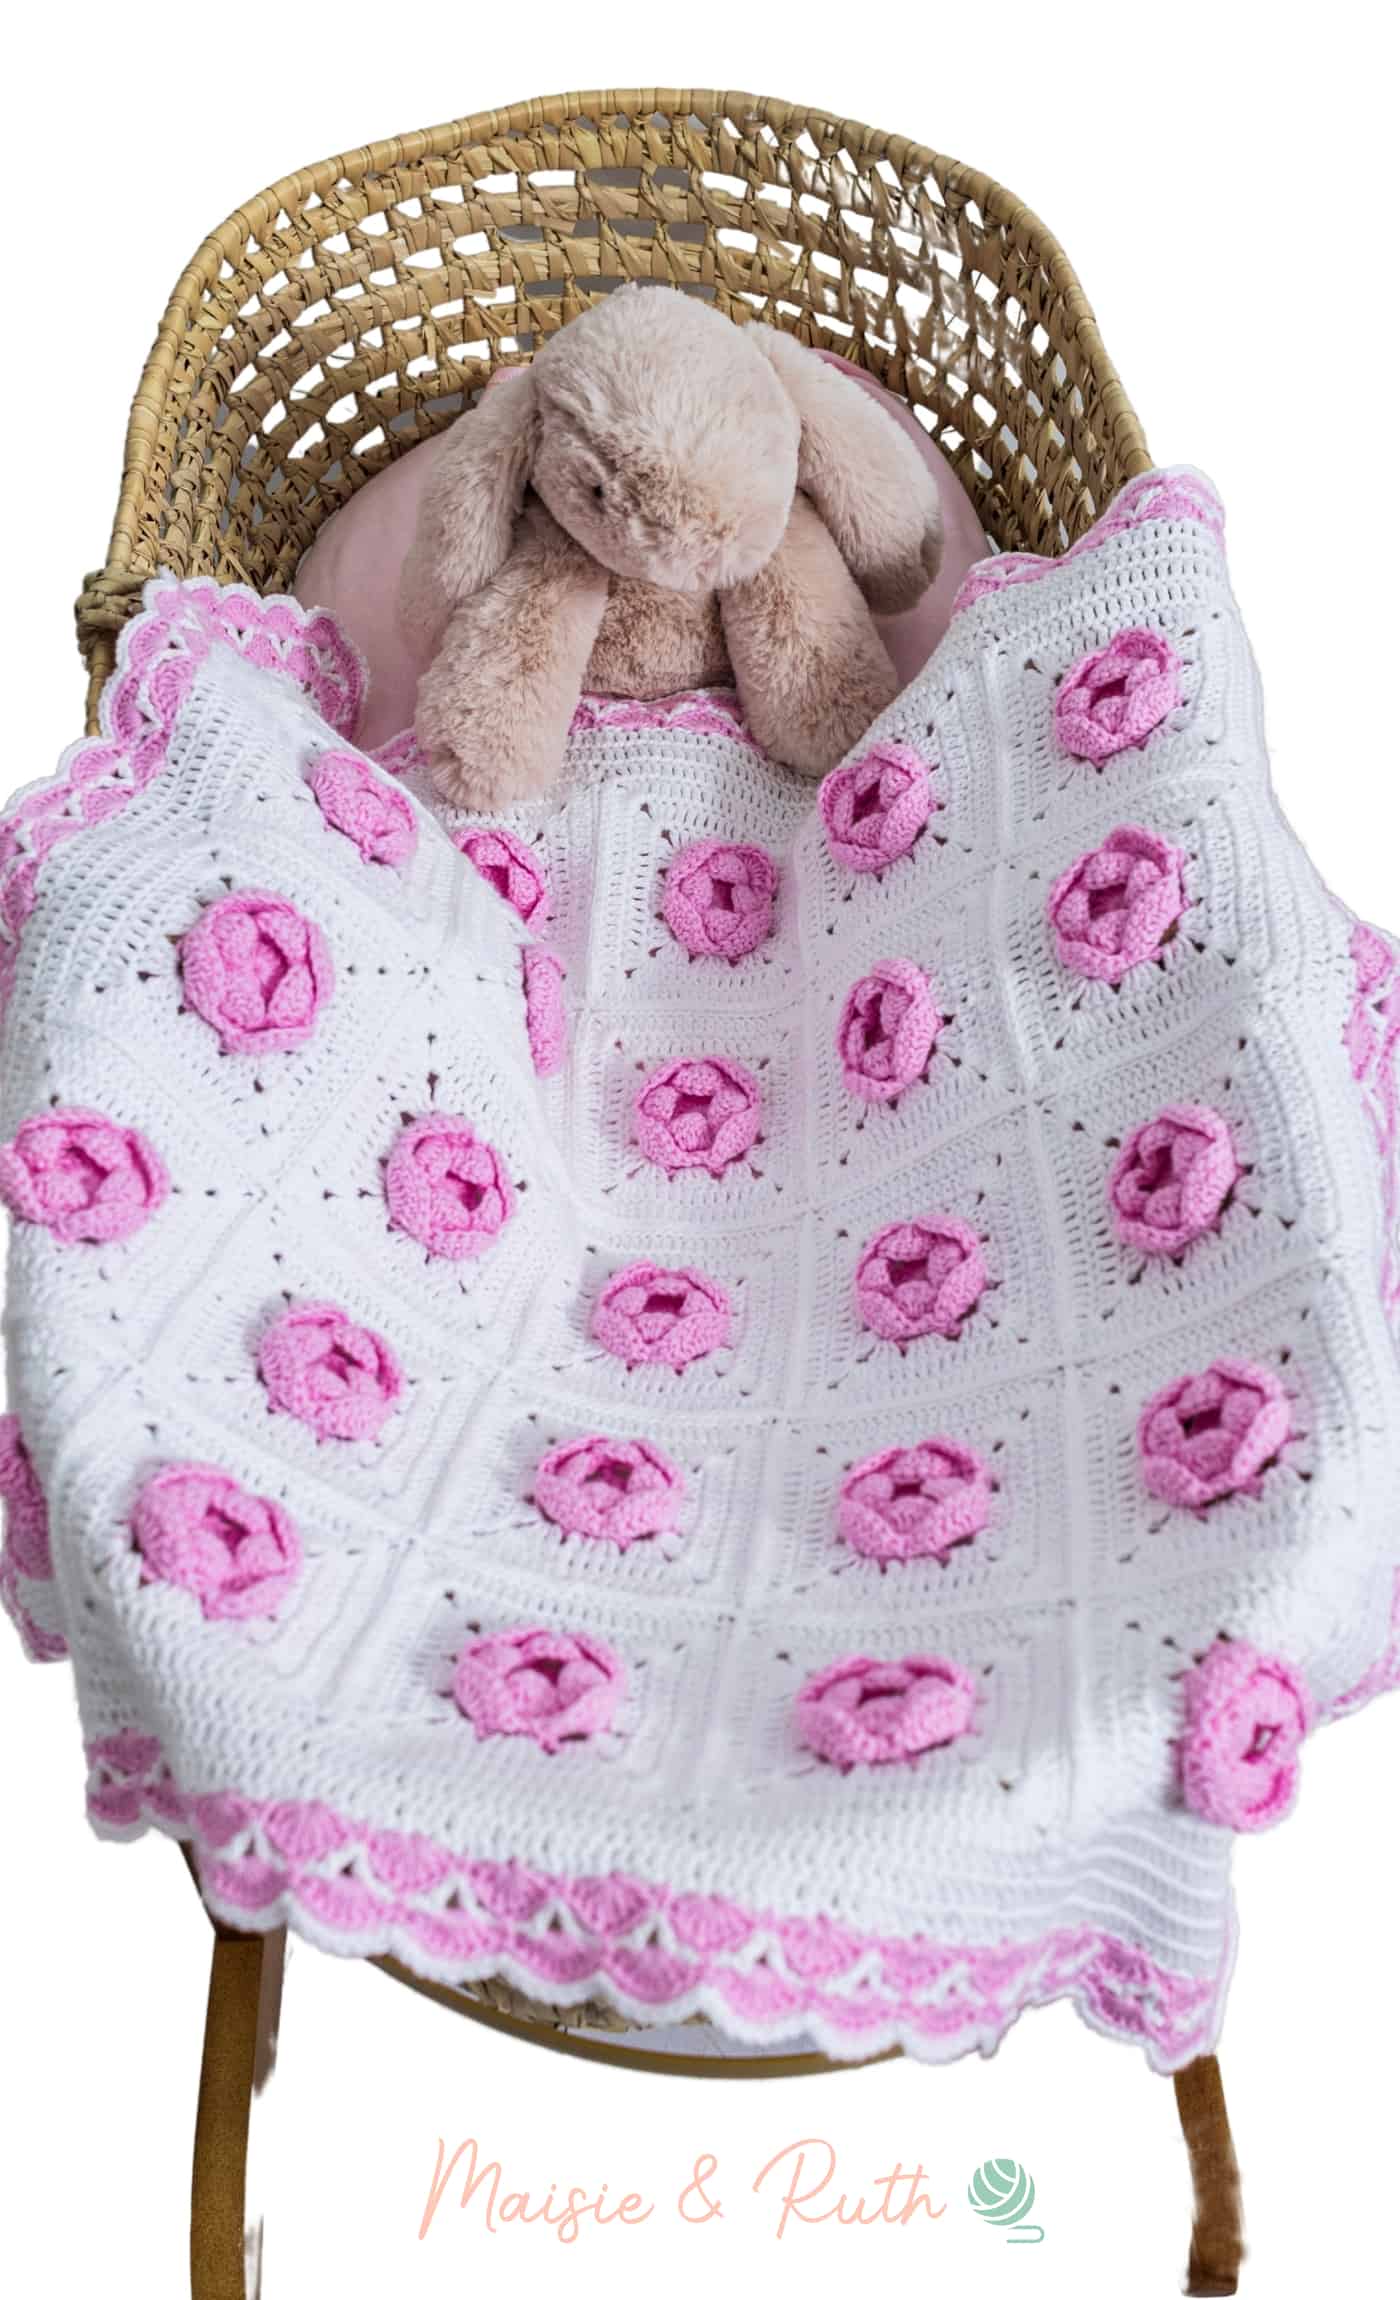 Crochet Rose Baby Blanket In Wicker cot with bunny